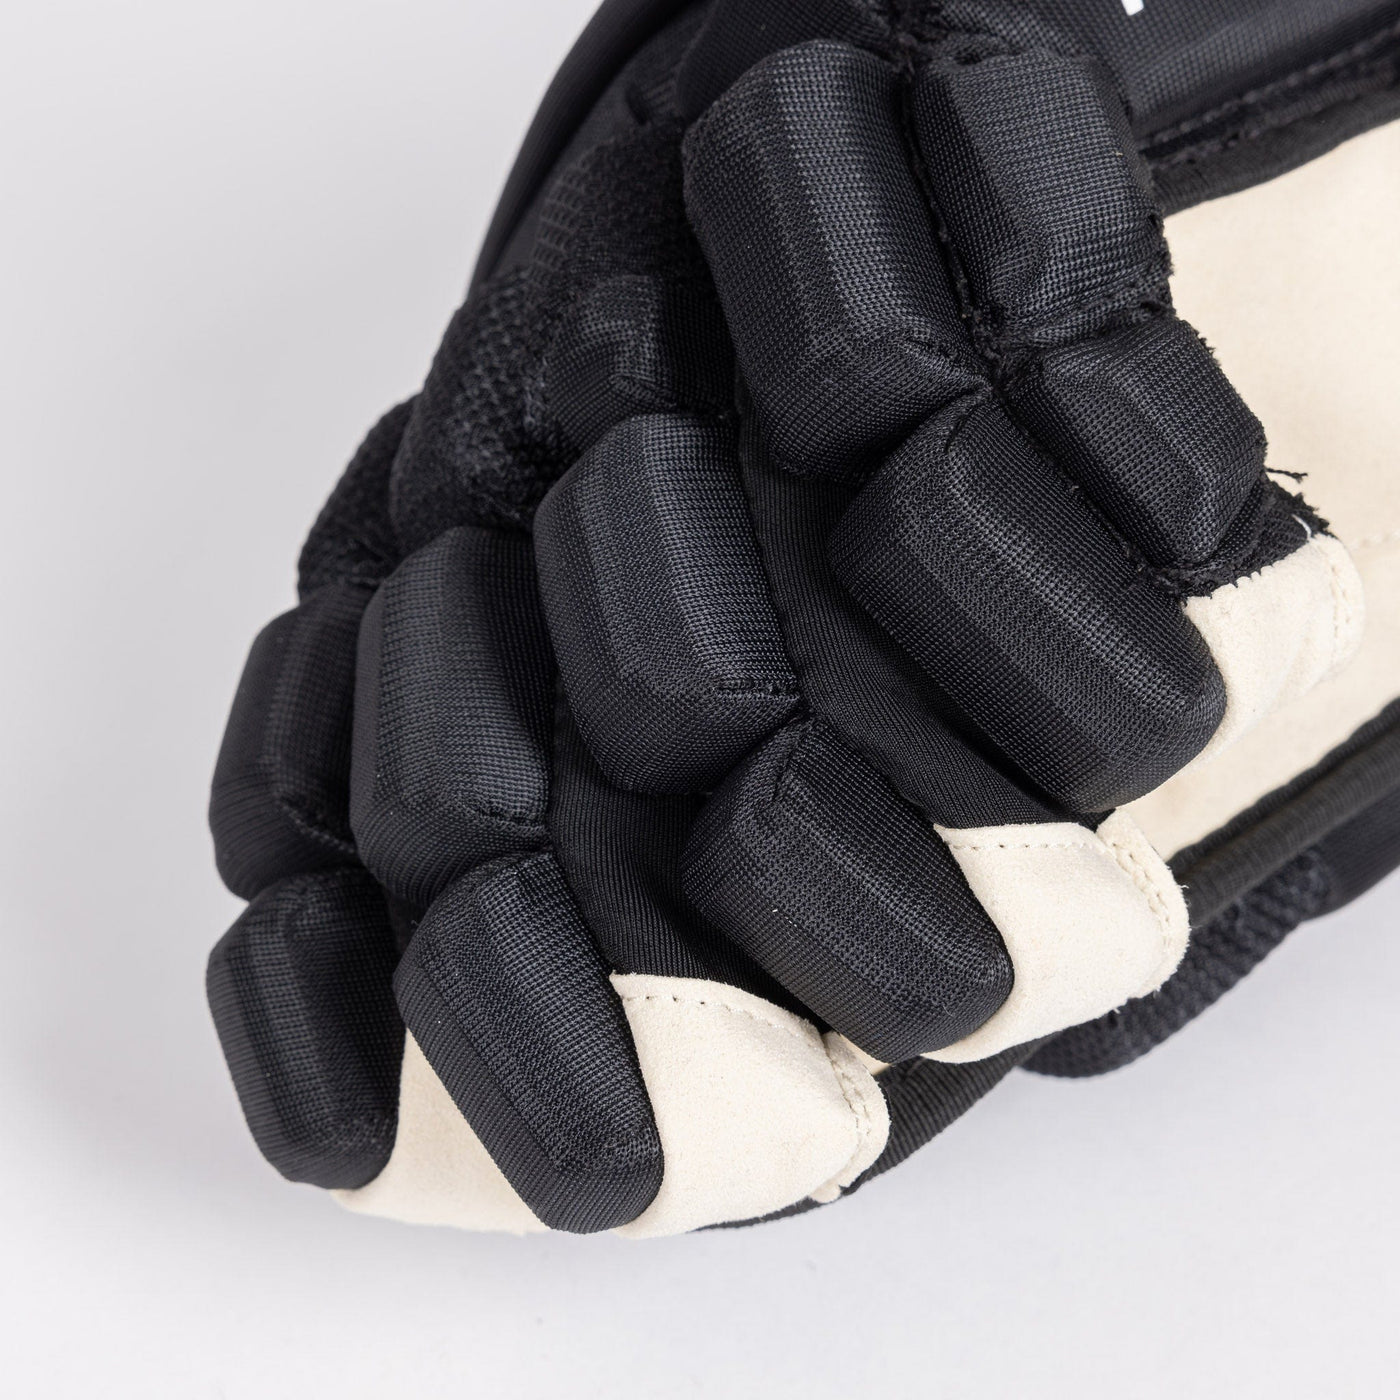 TRUE Catalyst Pro Stock Senior Hockey Glove - Ottawa - The Hockey Shop Source For Sports